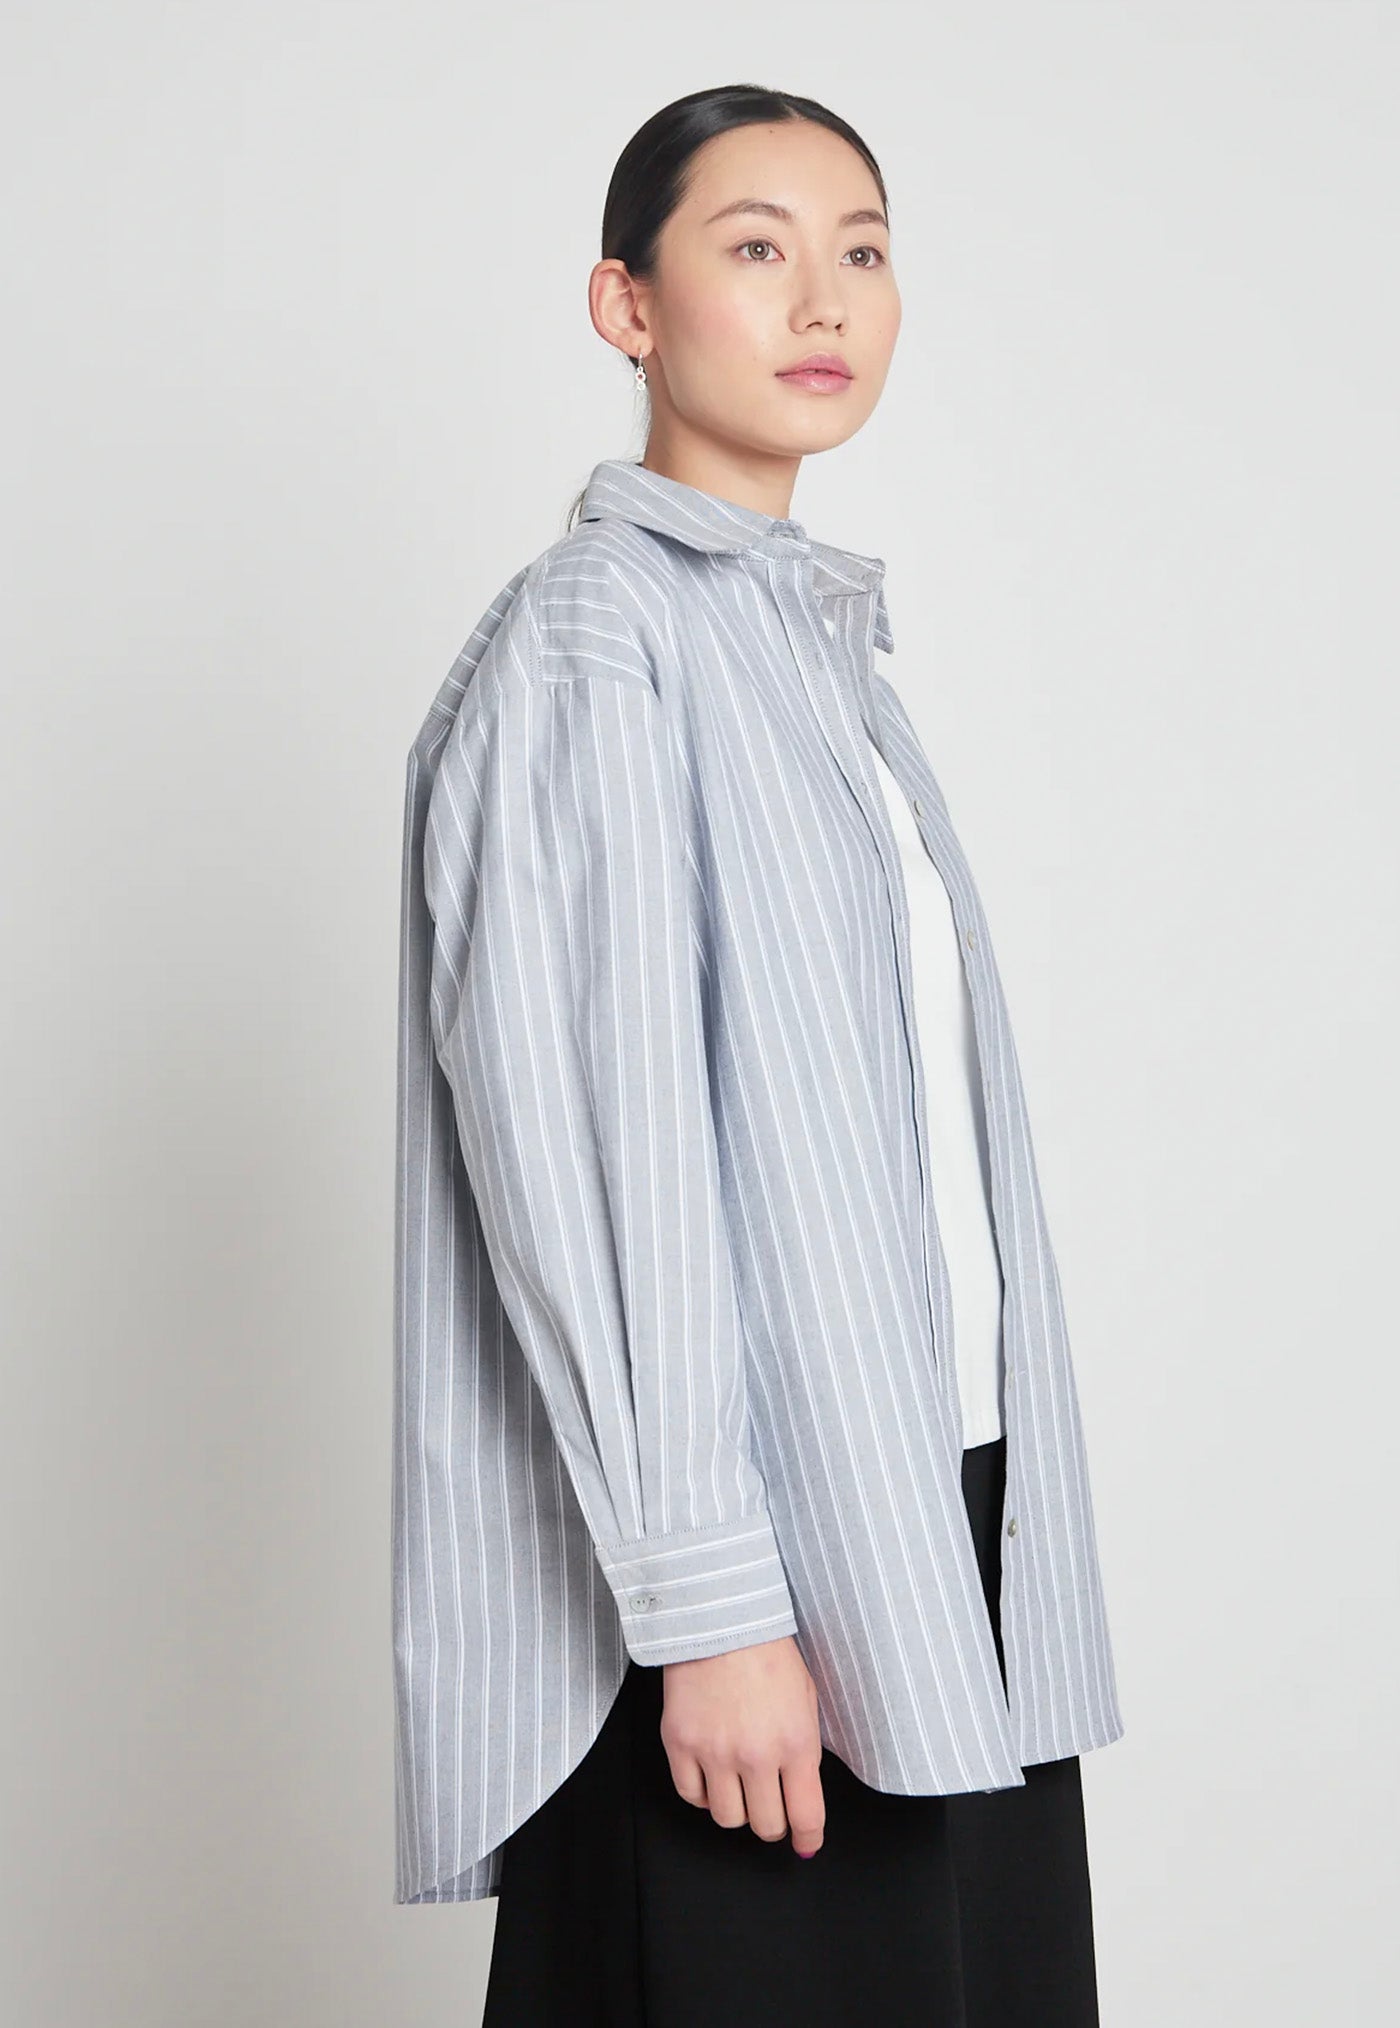 Zero-Gravity Shirt - Grey Stripe sold by Angel Divine